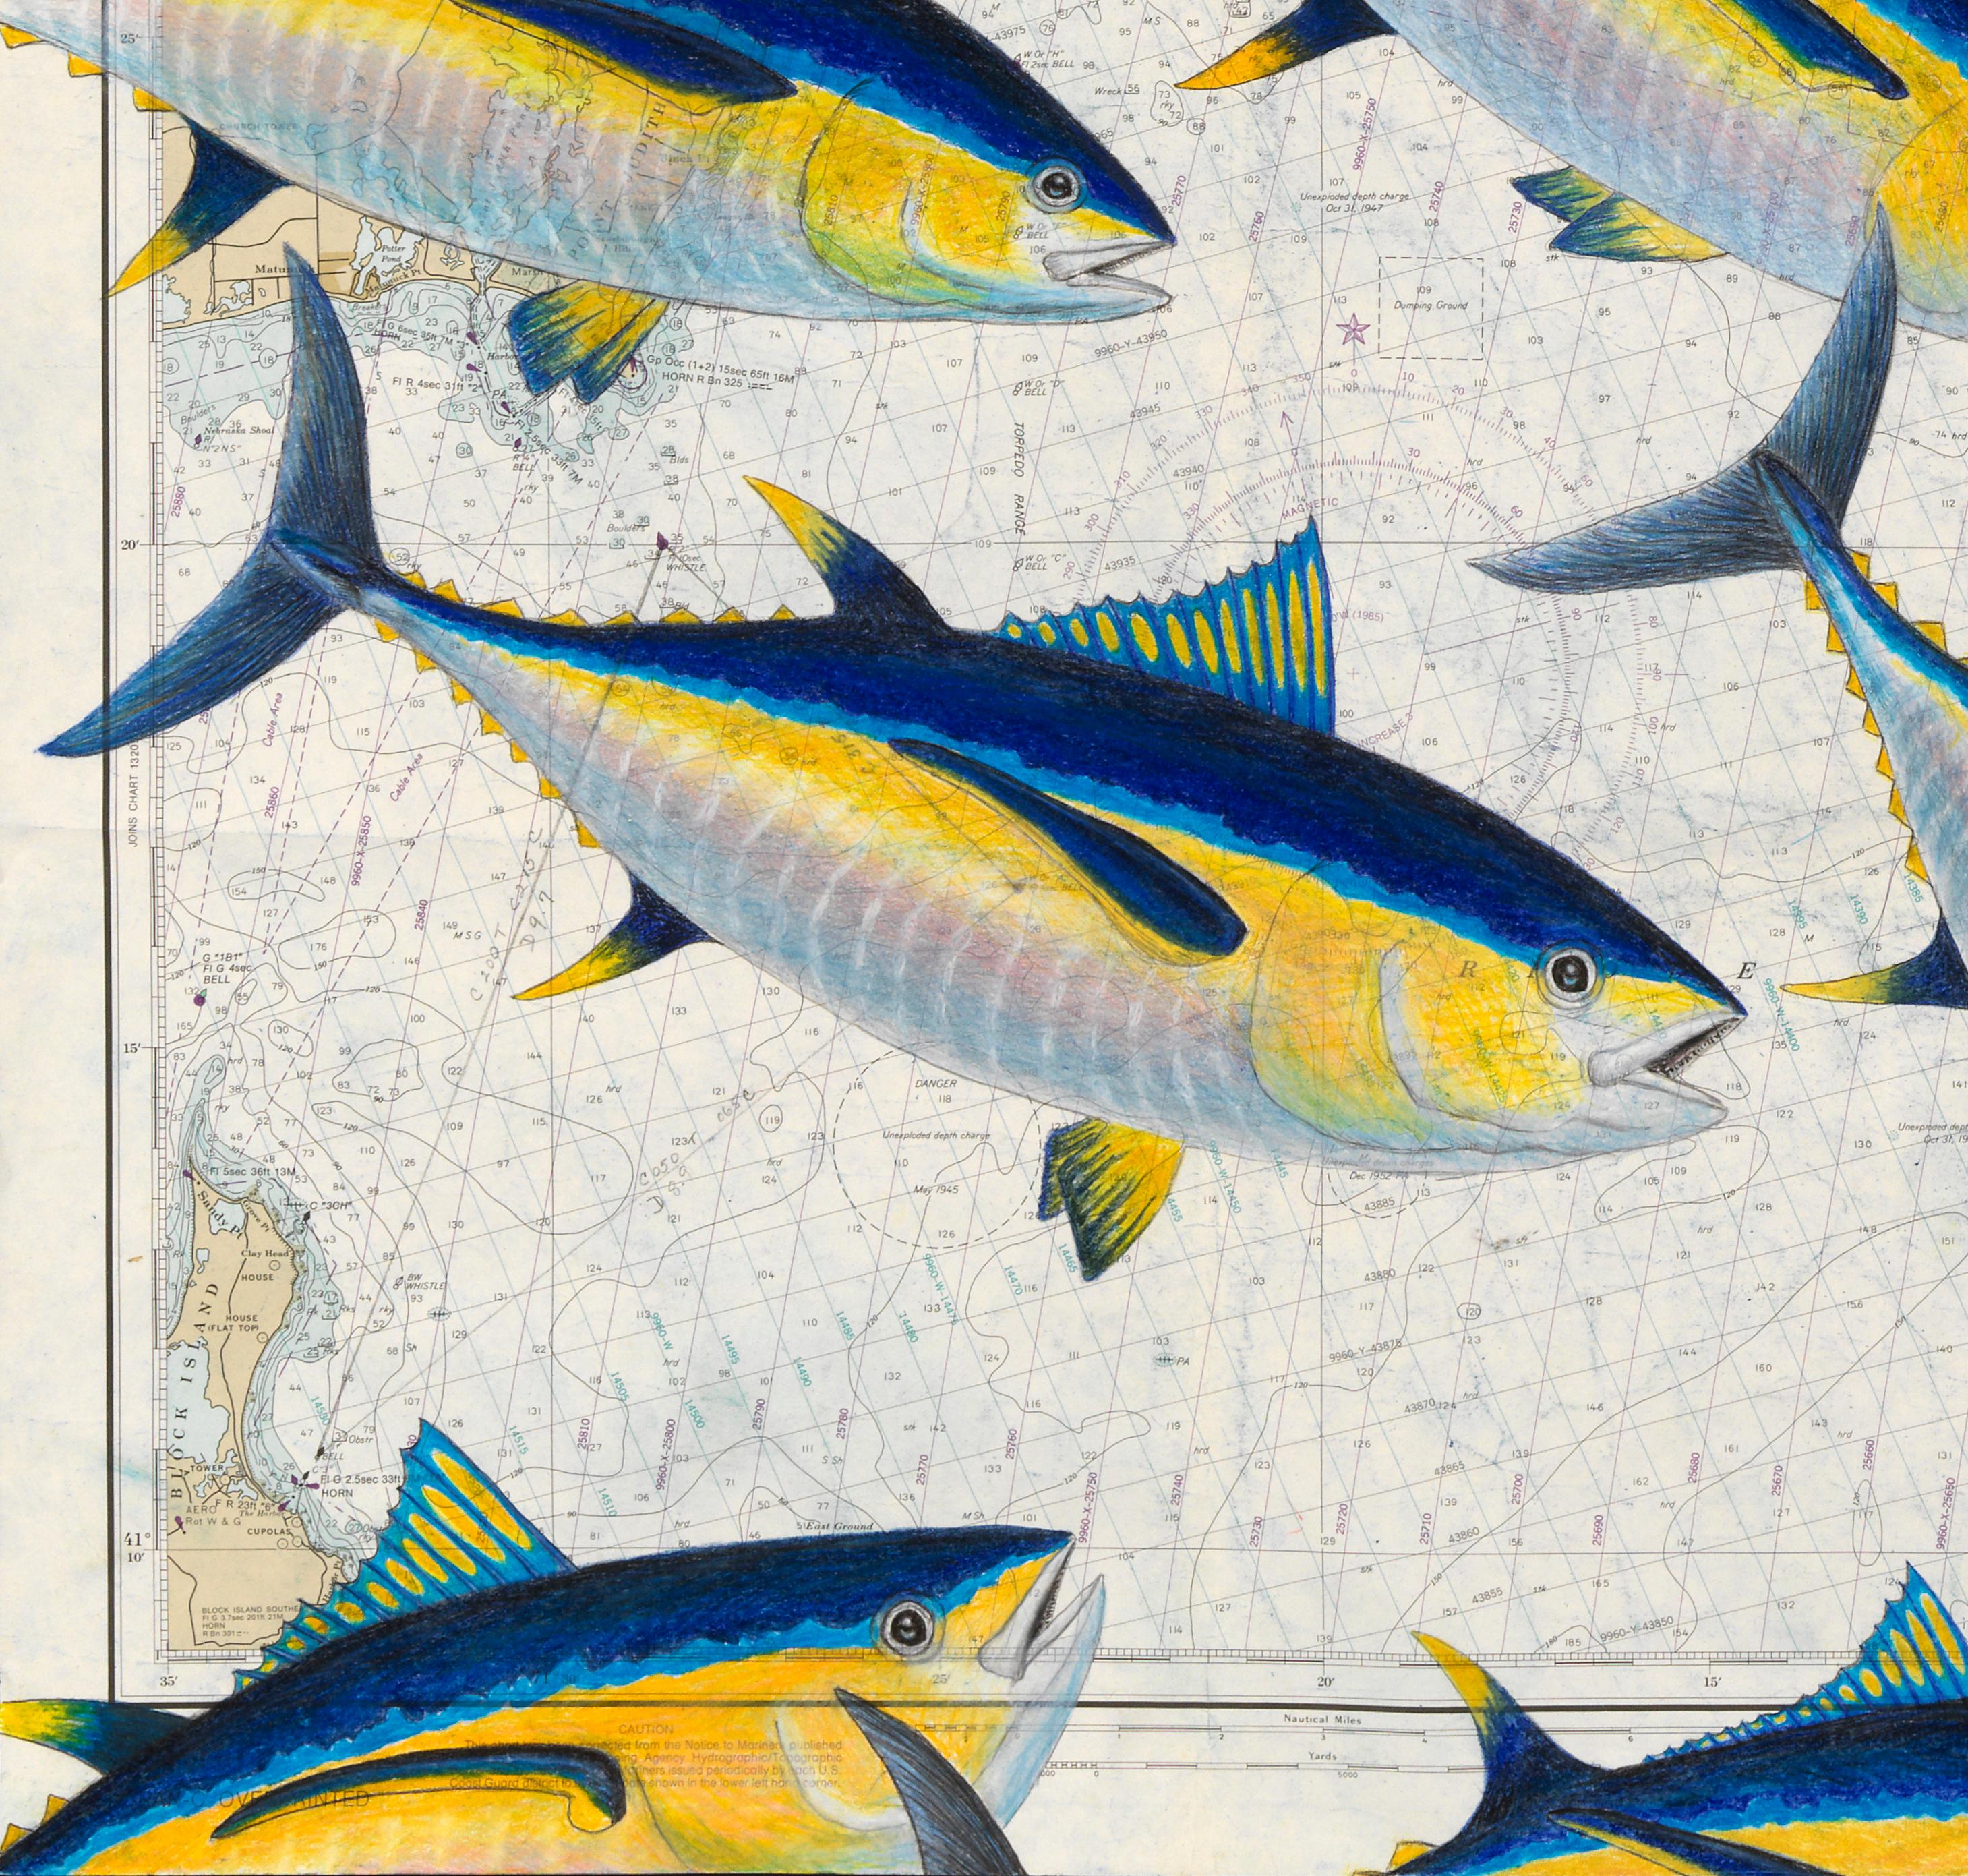 Martha's Vineyard to Block Island, Big Tuna - Painting on a Vintage Nautical Map 1